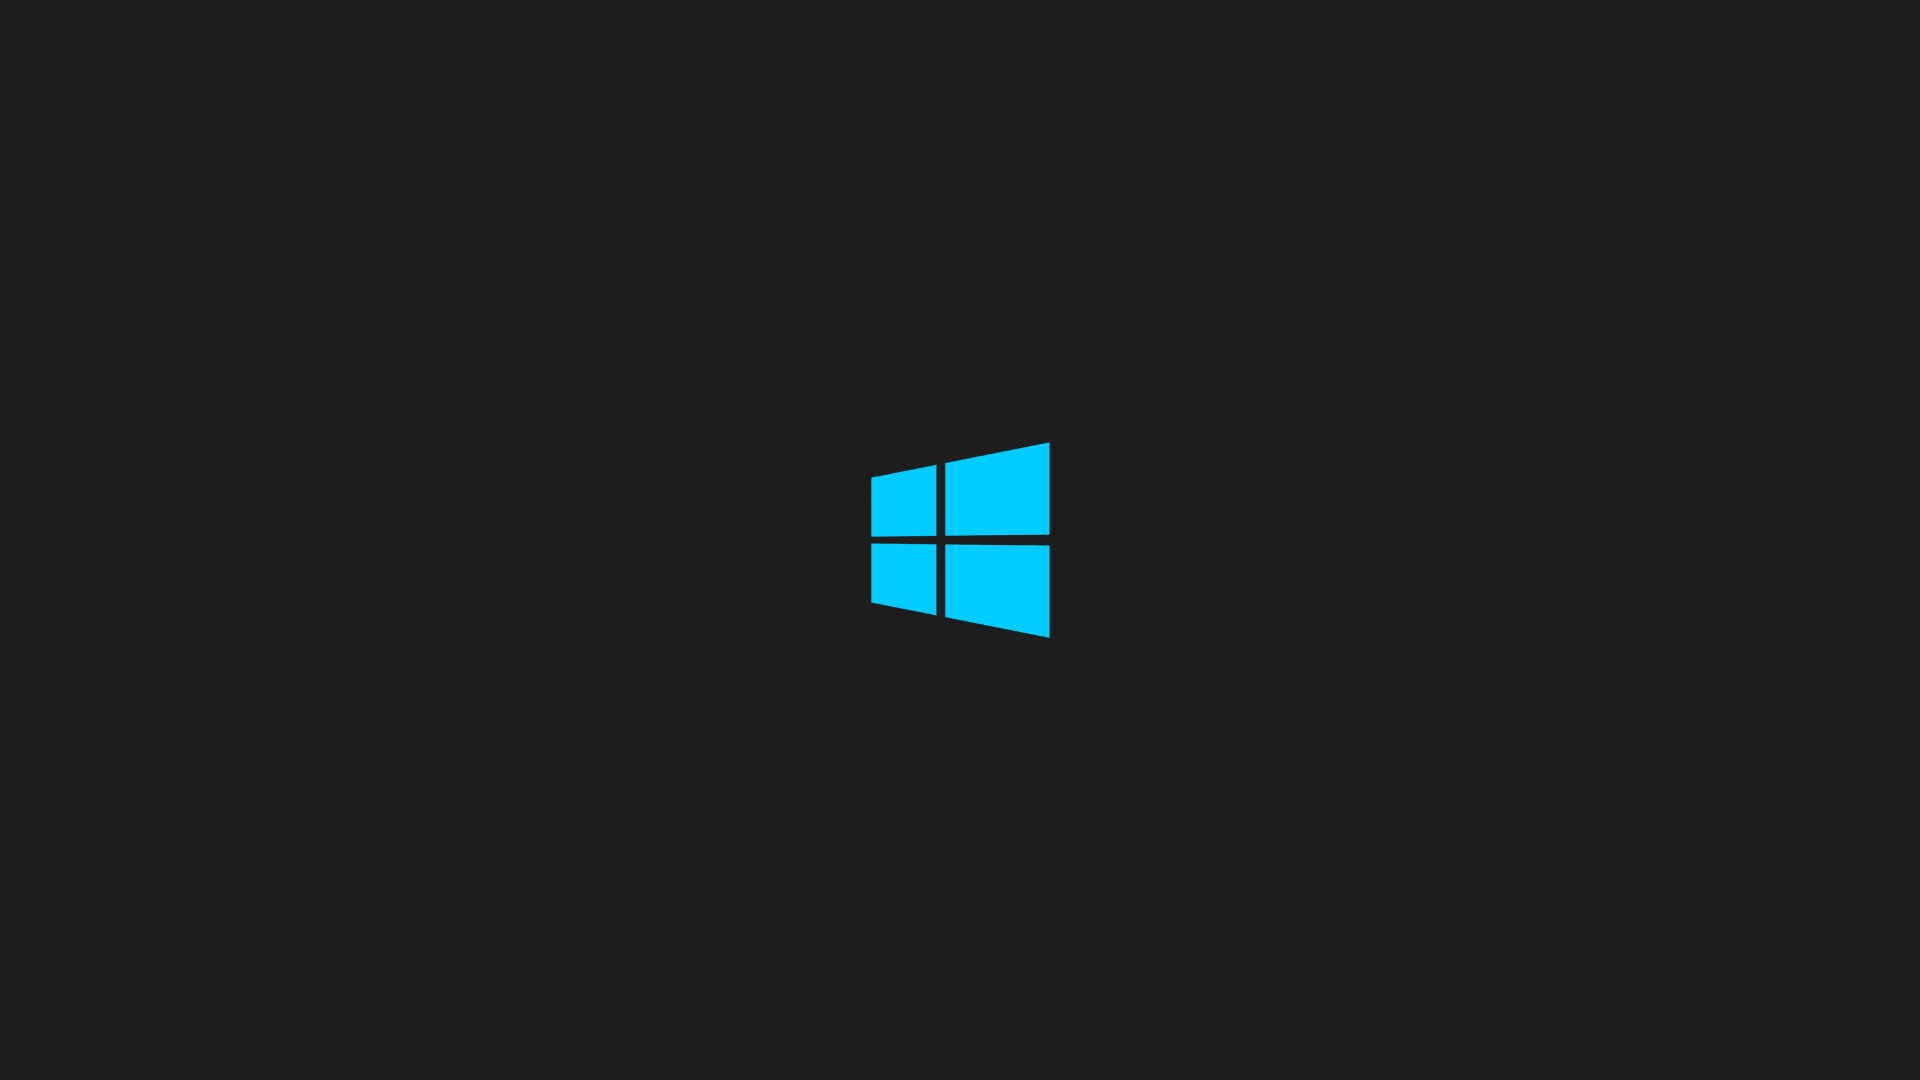 Dark Windows Logo - Windows Dark - HD Wallpapers